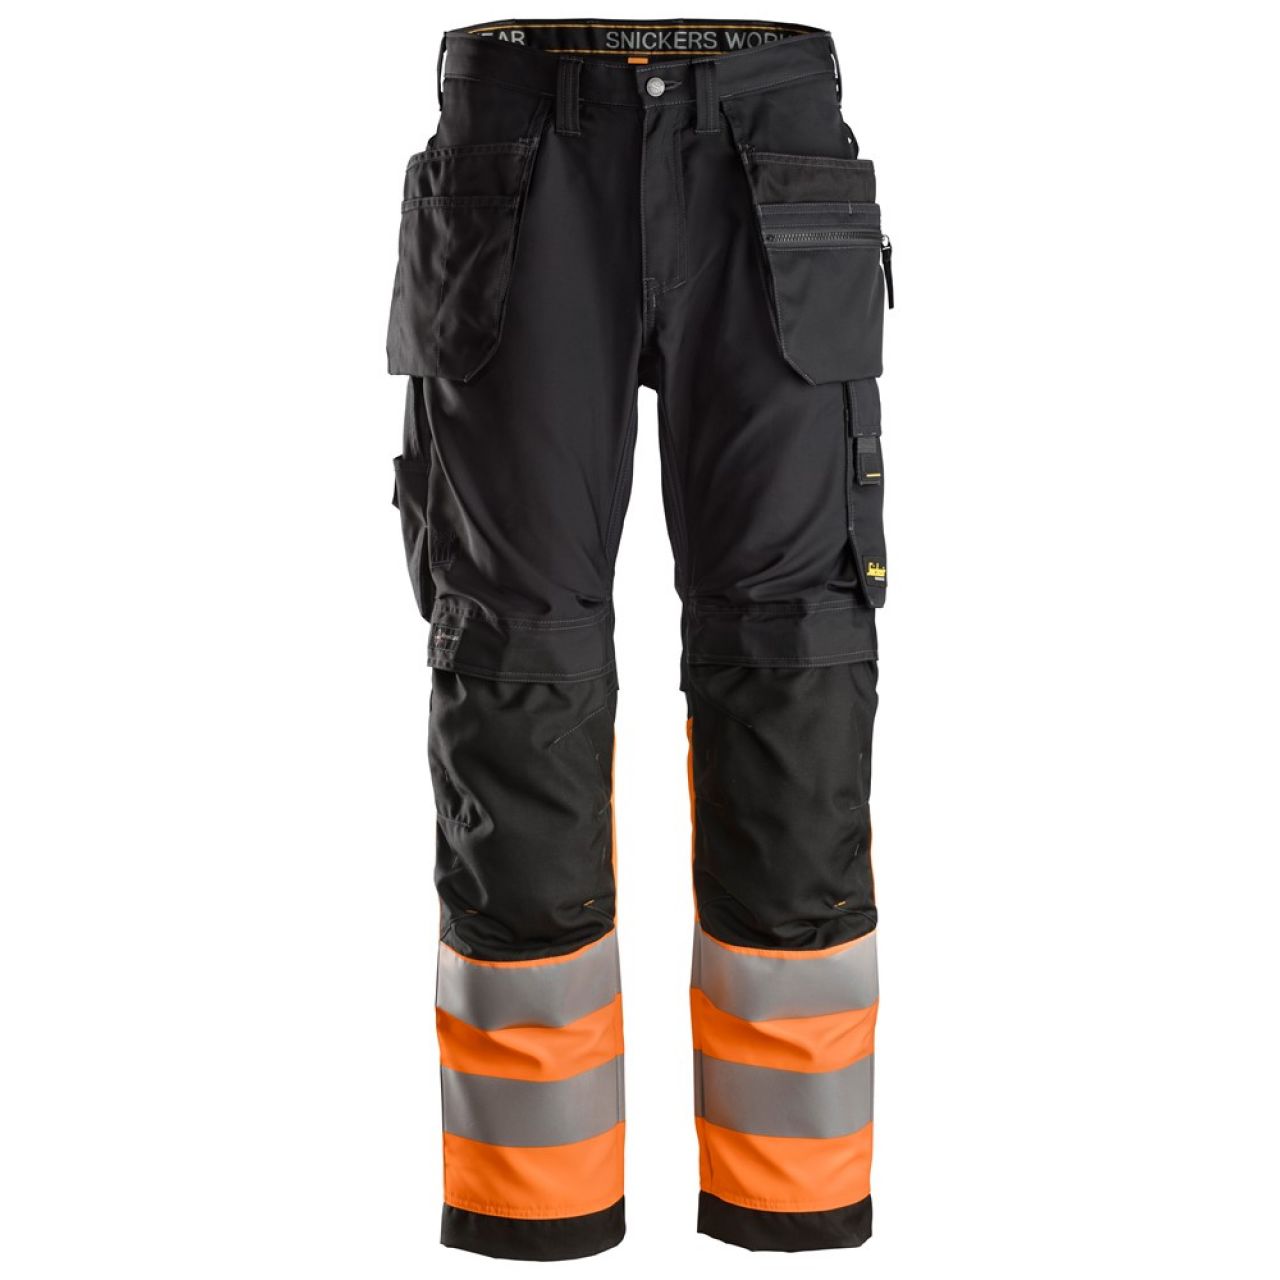 6233 Pantalones largos de trabajo de alta visibilidad clase 1 con bolsillos flotantes AllroundWork negro-naranja talla 62